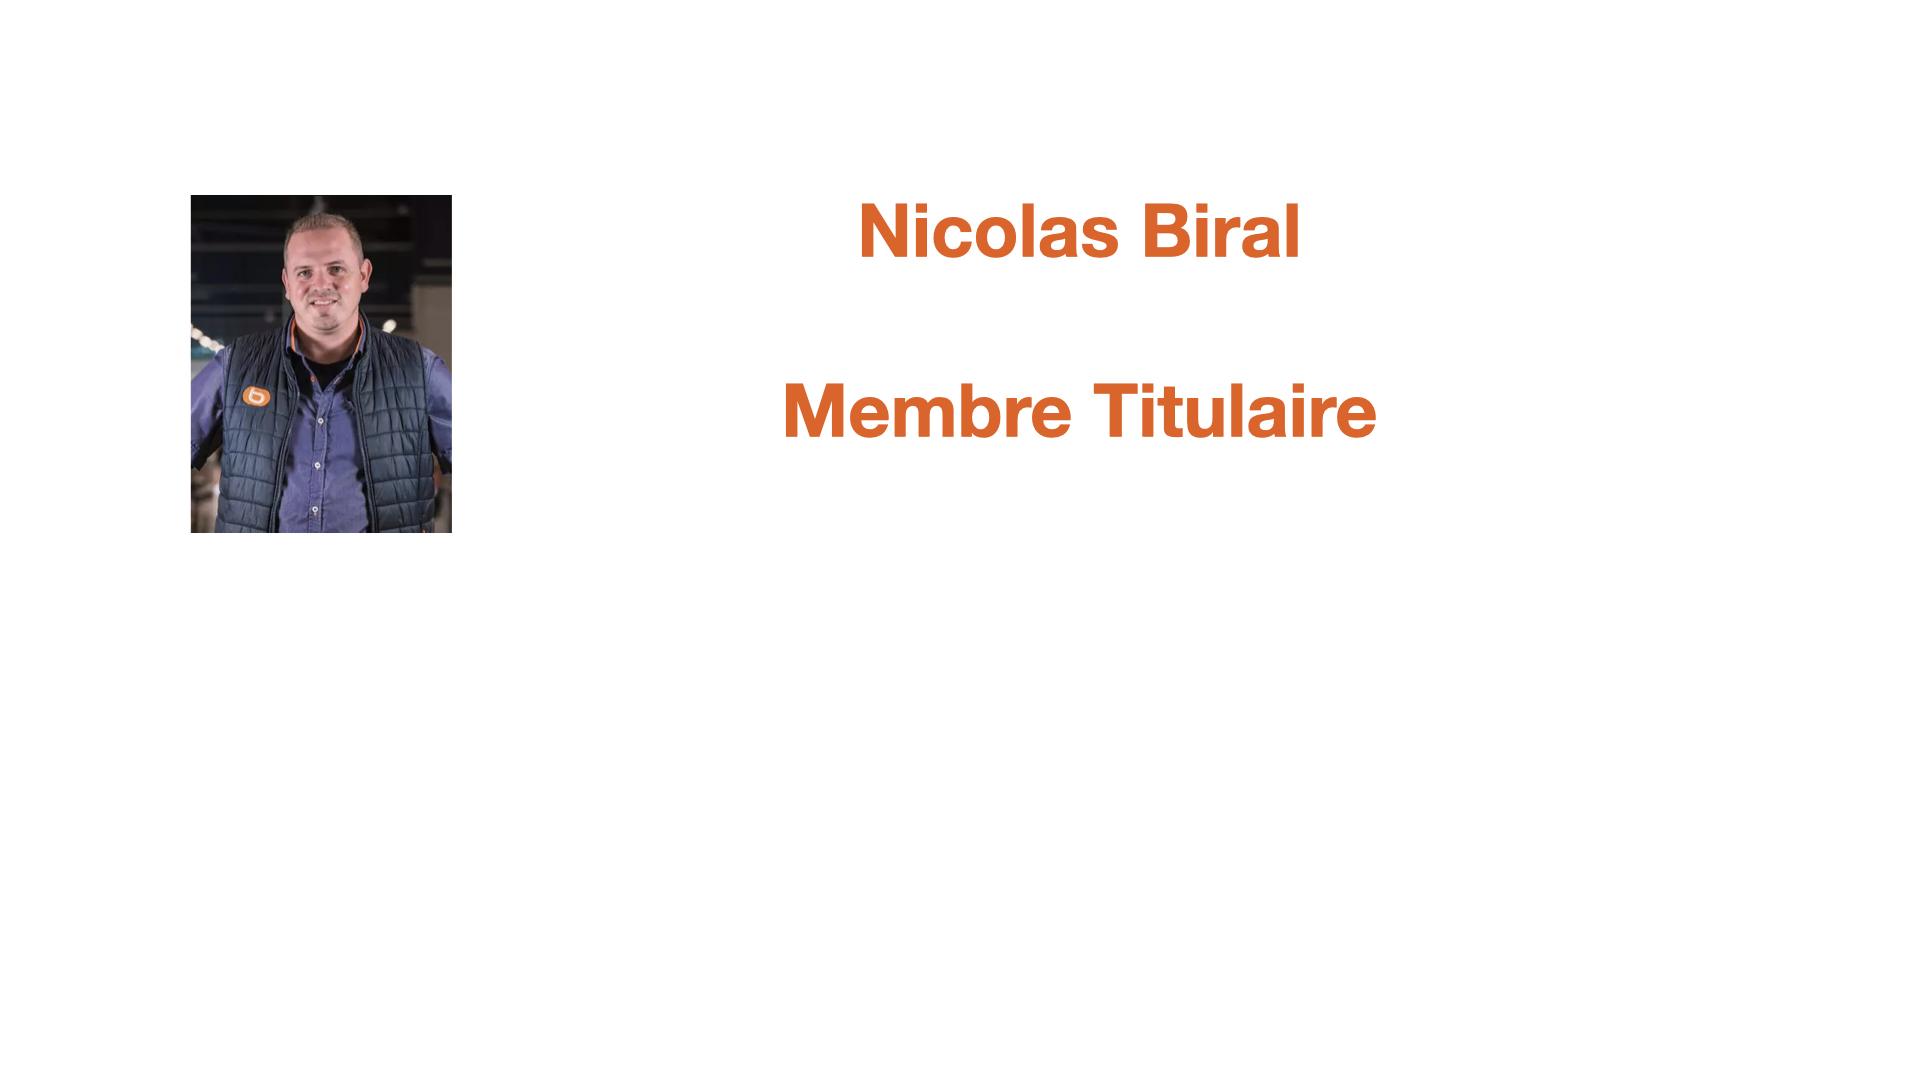 Nicolas Biral